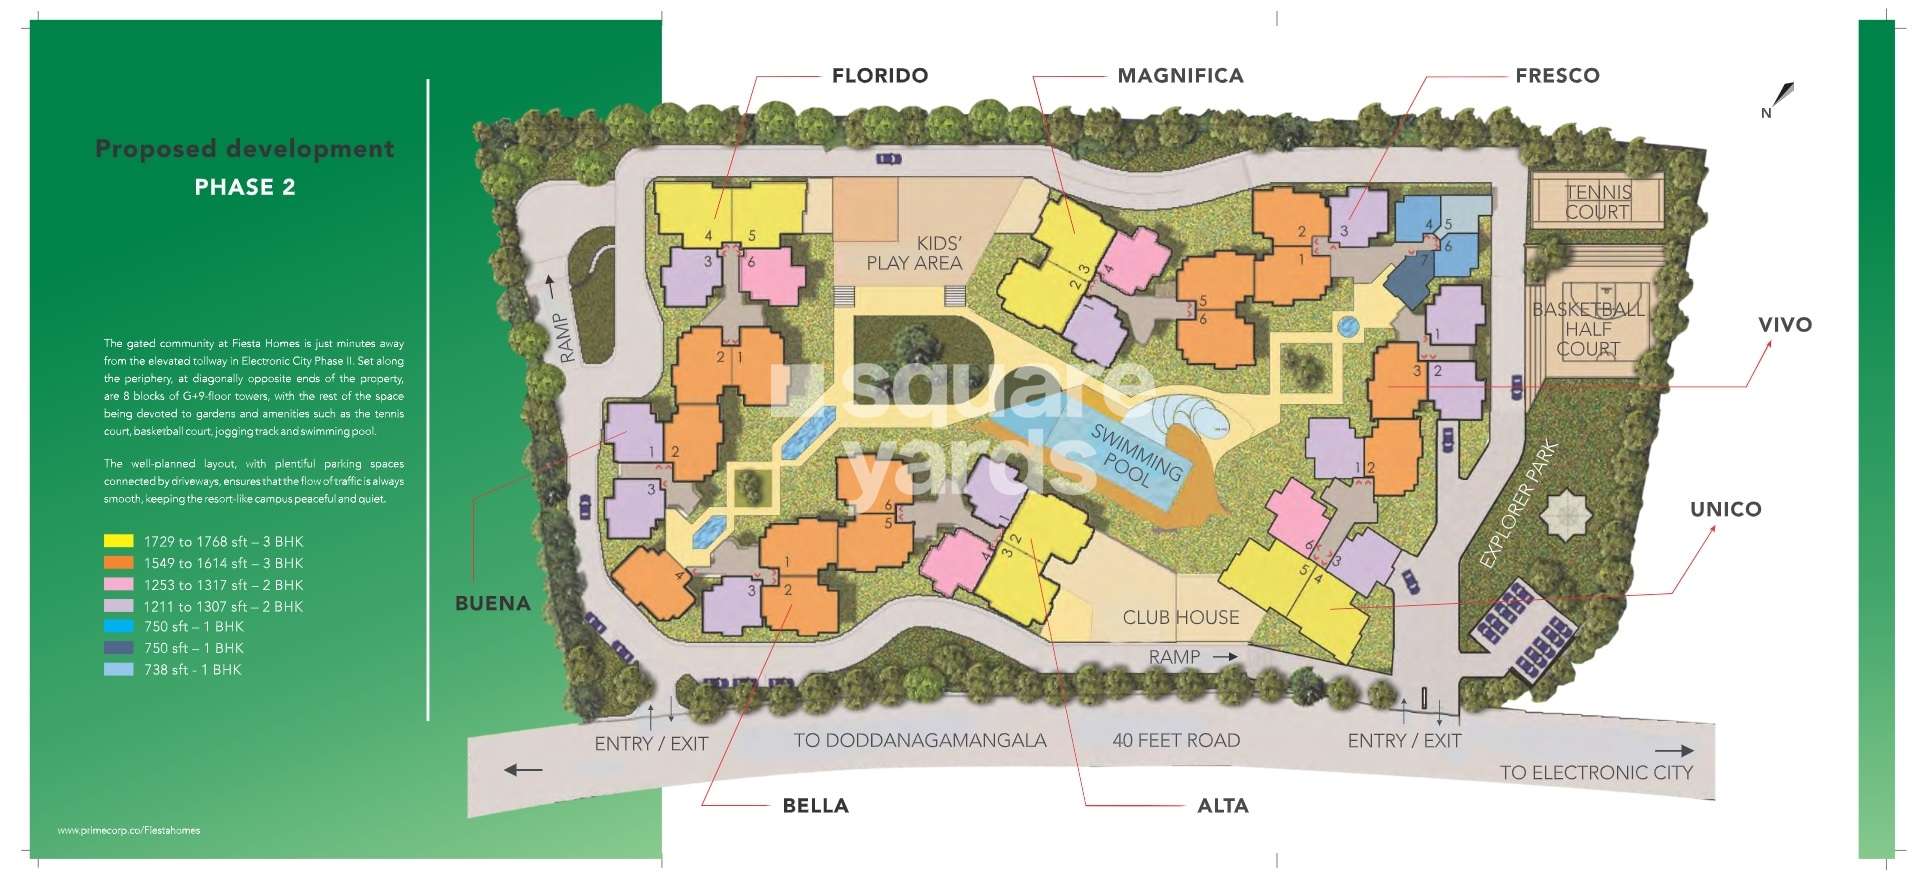 sjr fiesta homes project master plan image1